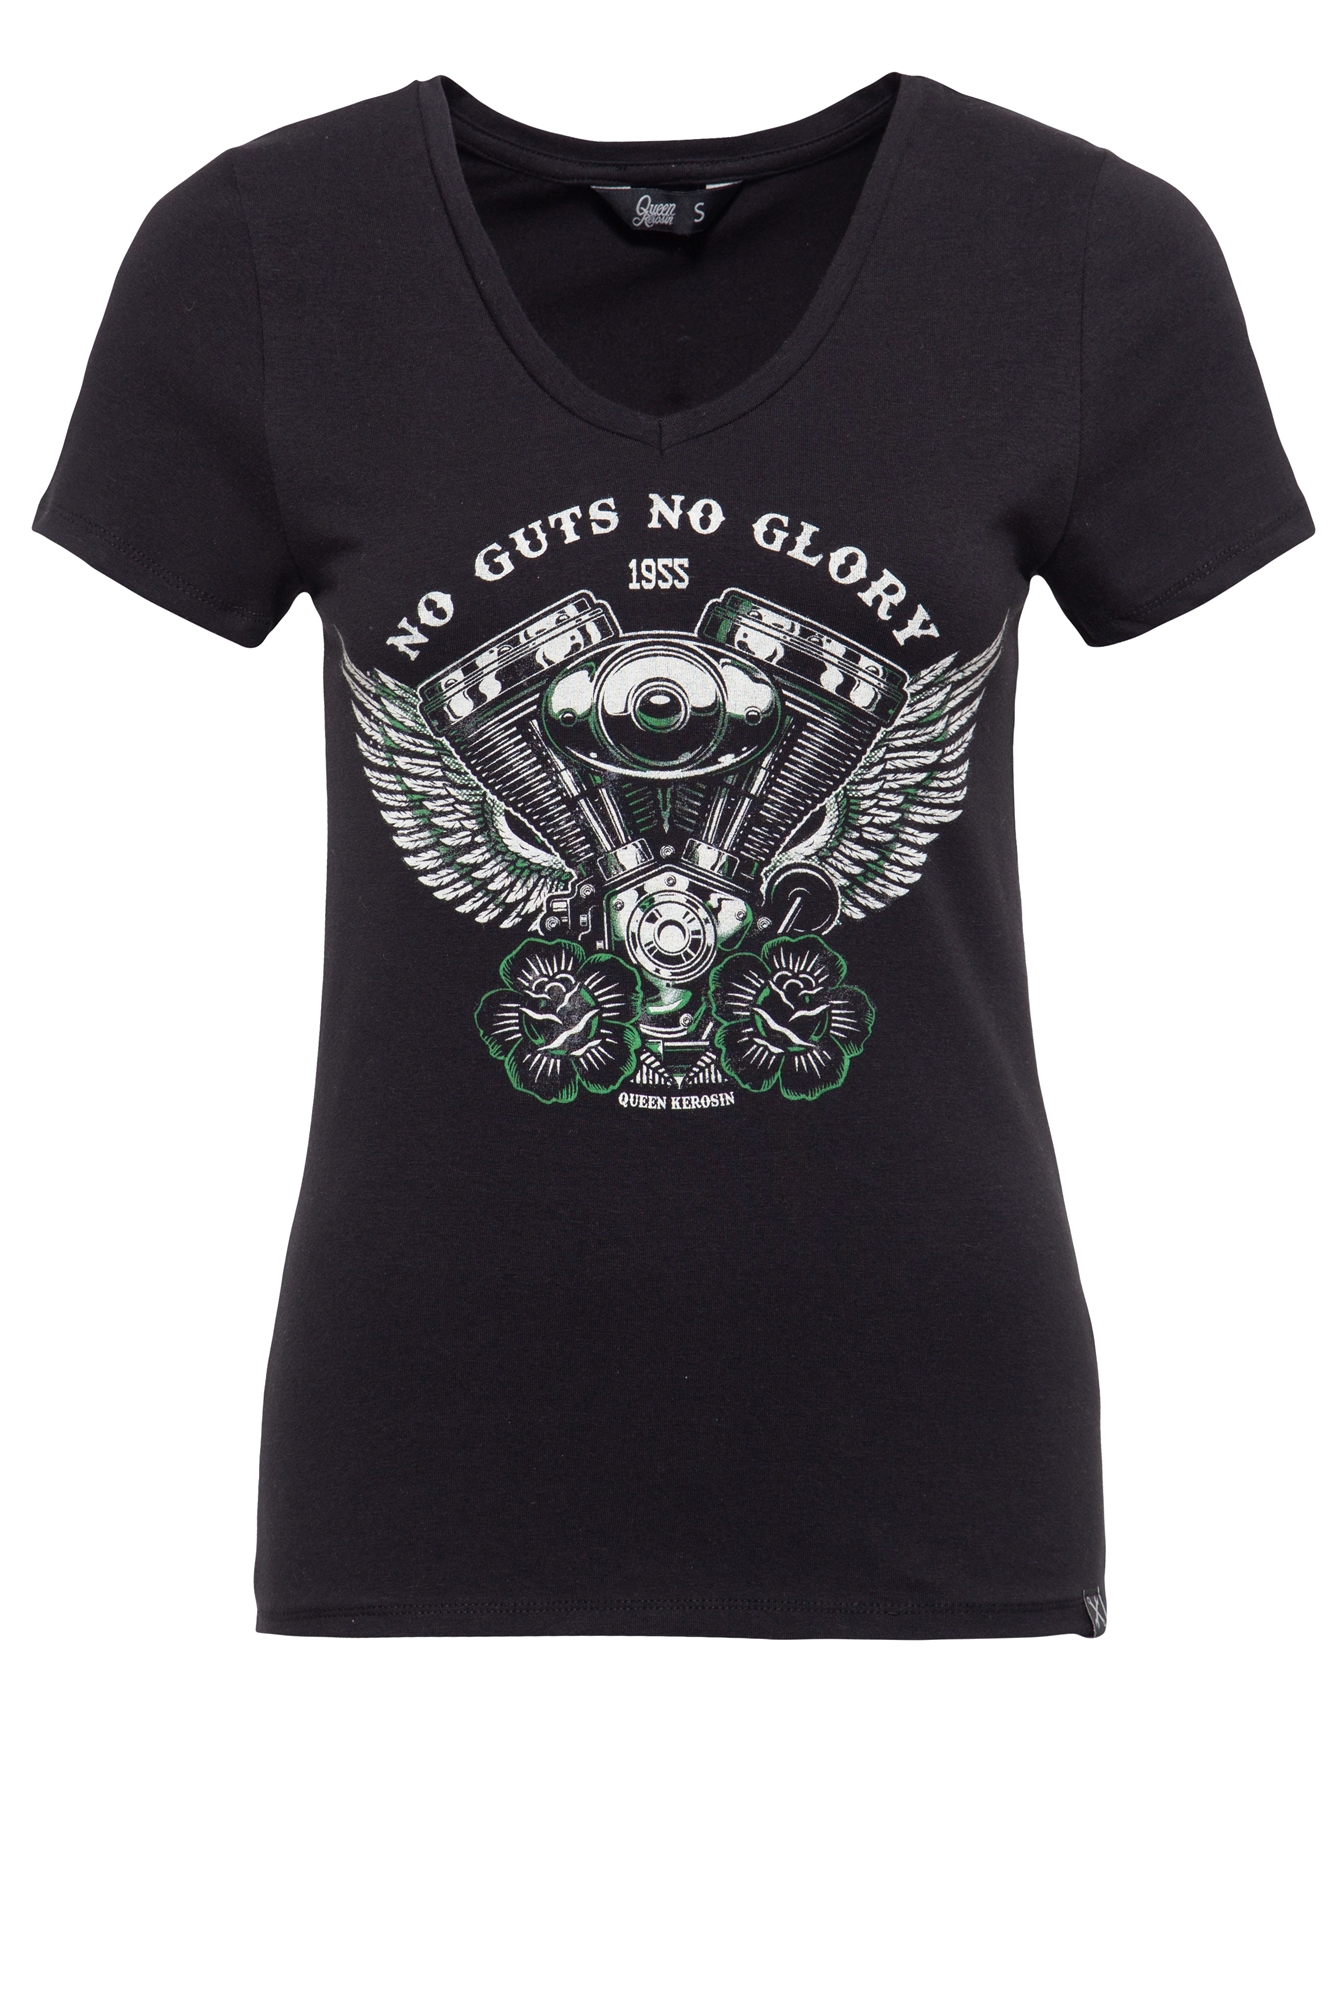 Queen Kerosin T-Shirt - No Guts No Glory S